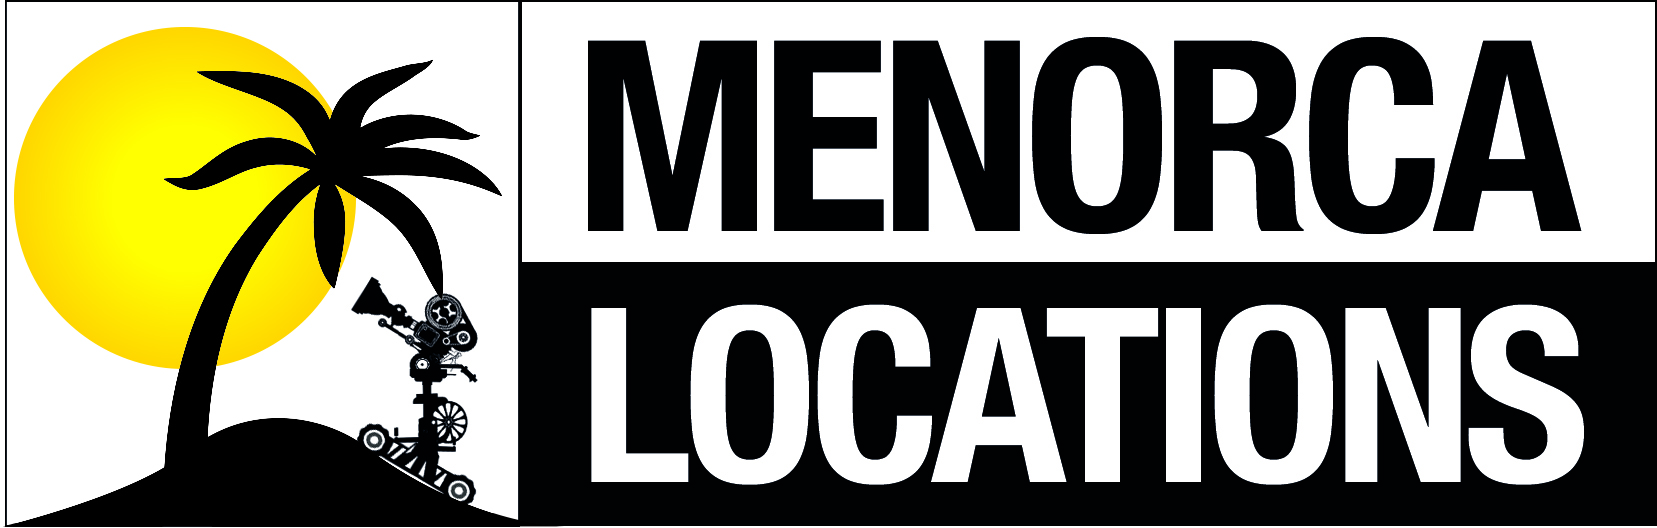 Menorca Locations